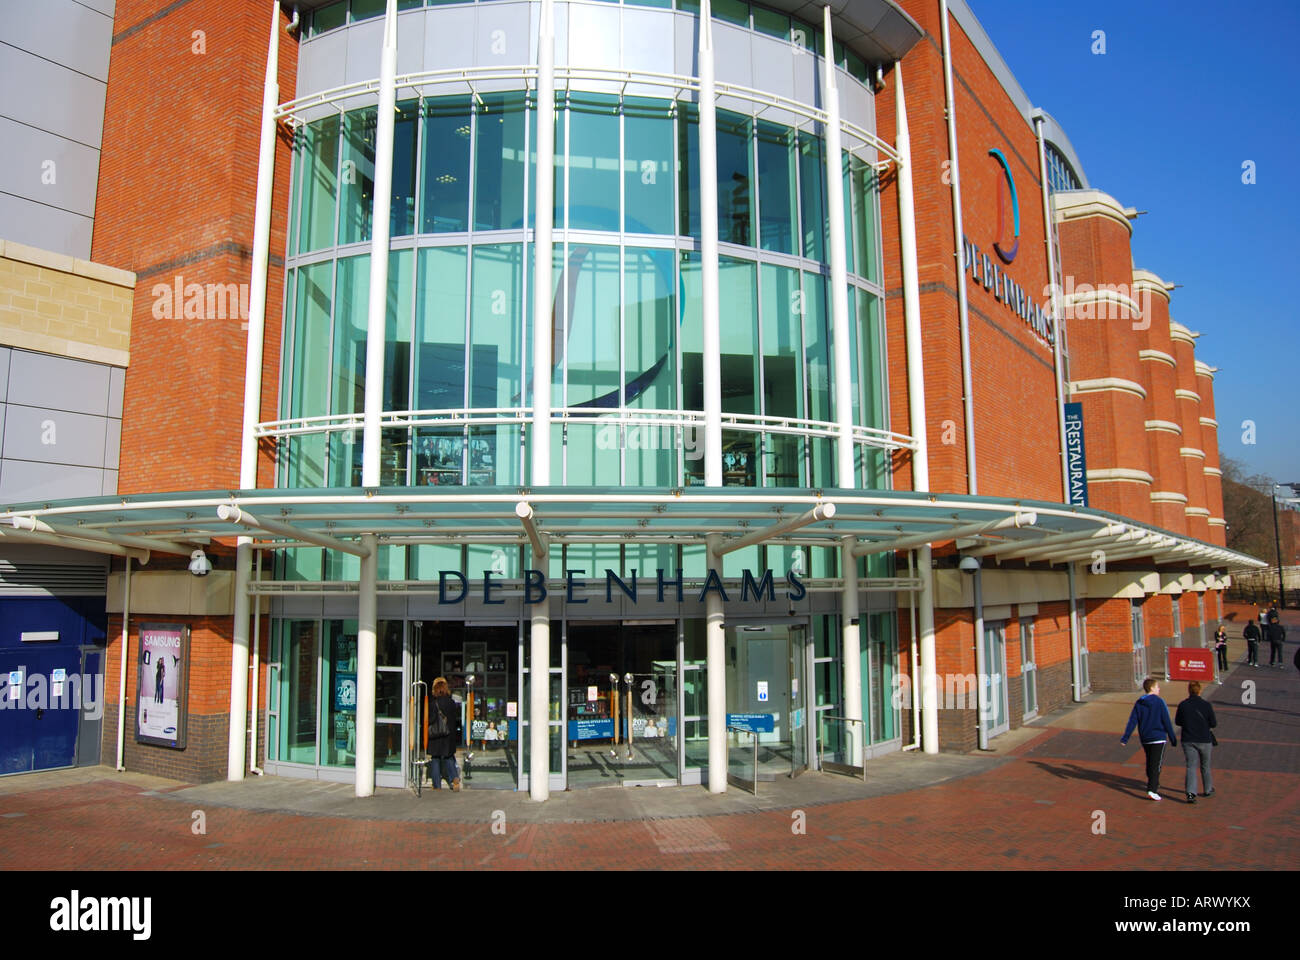 Debenham's Department Store, The Oracle Shopping Centre, Reading, Berkshire, England, United Kingdom. Stock Photo